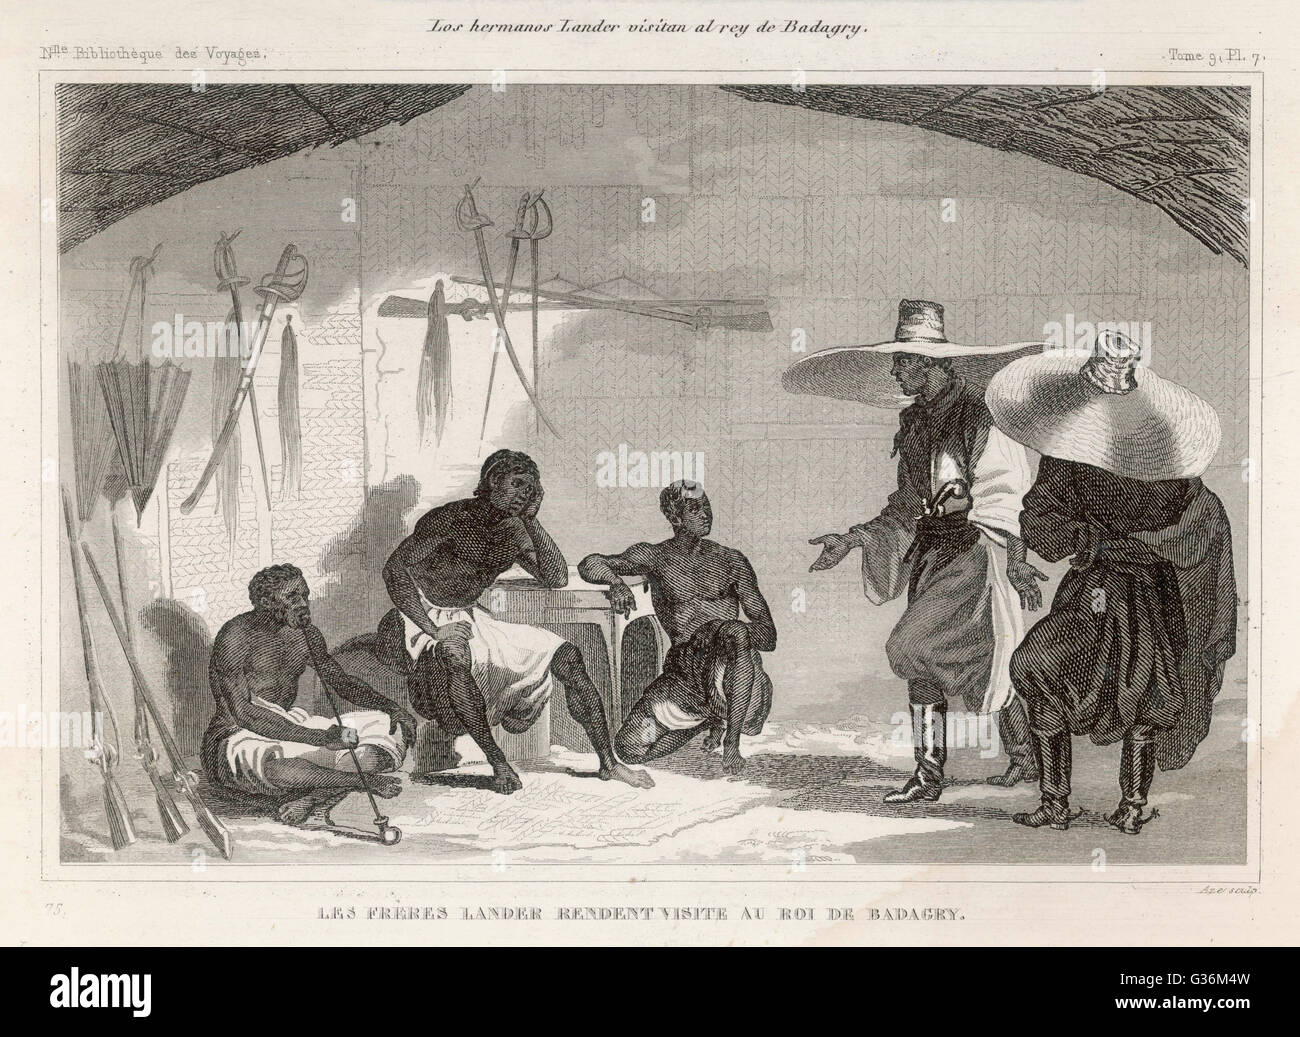 Richard and John Lander, african explorers,  visit  the King of Badagry, Lagos, Nigeria         Date: 1830-31 Stock Photo